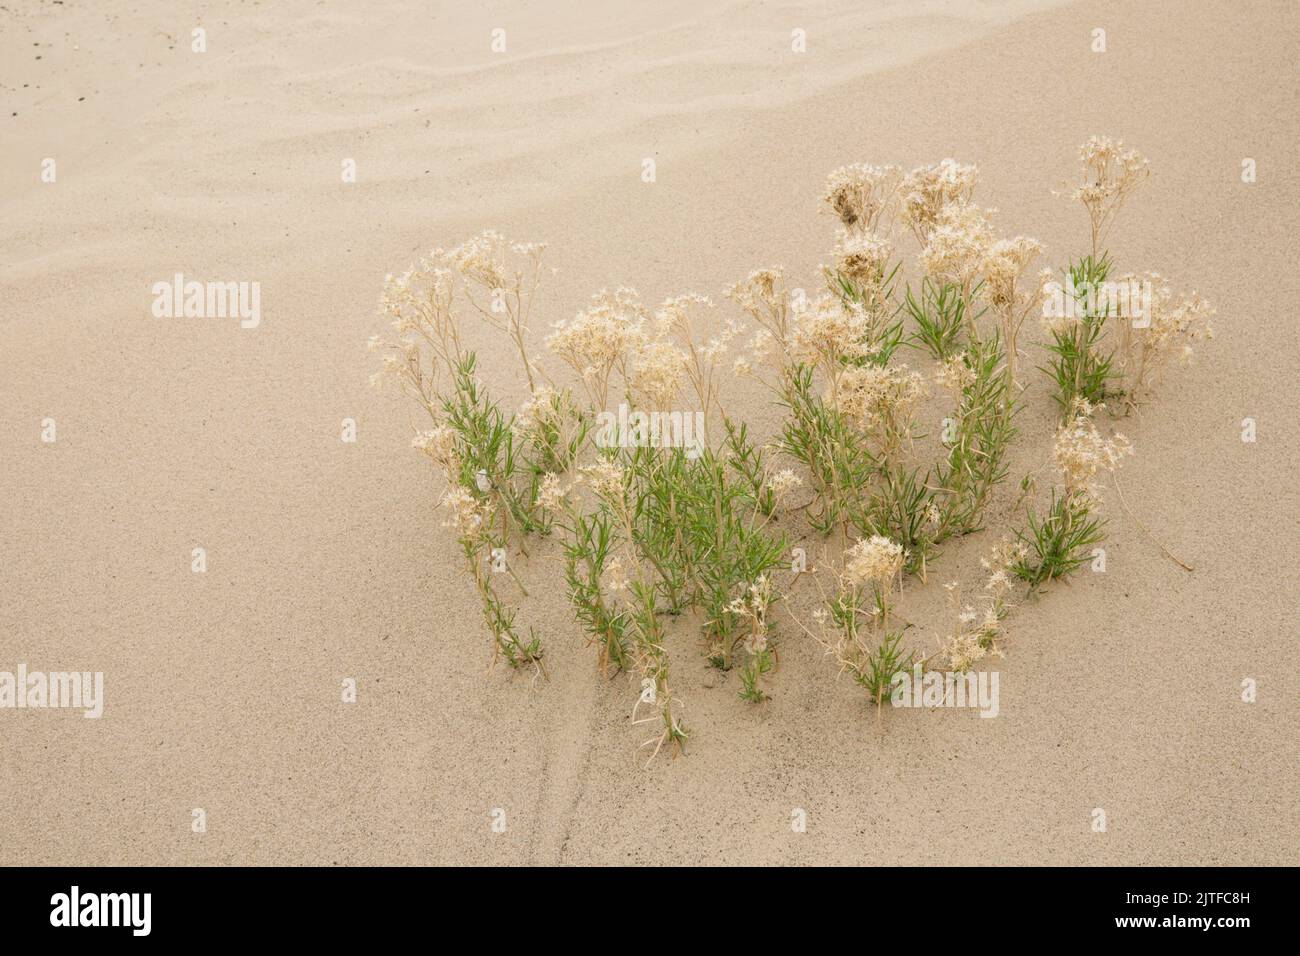 Window Rock, Arizona, USA. Drought tolerant plant survives in the sand. Stock Photo